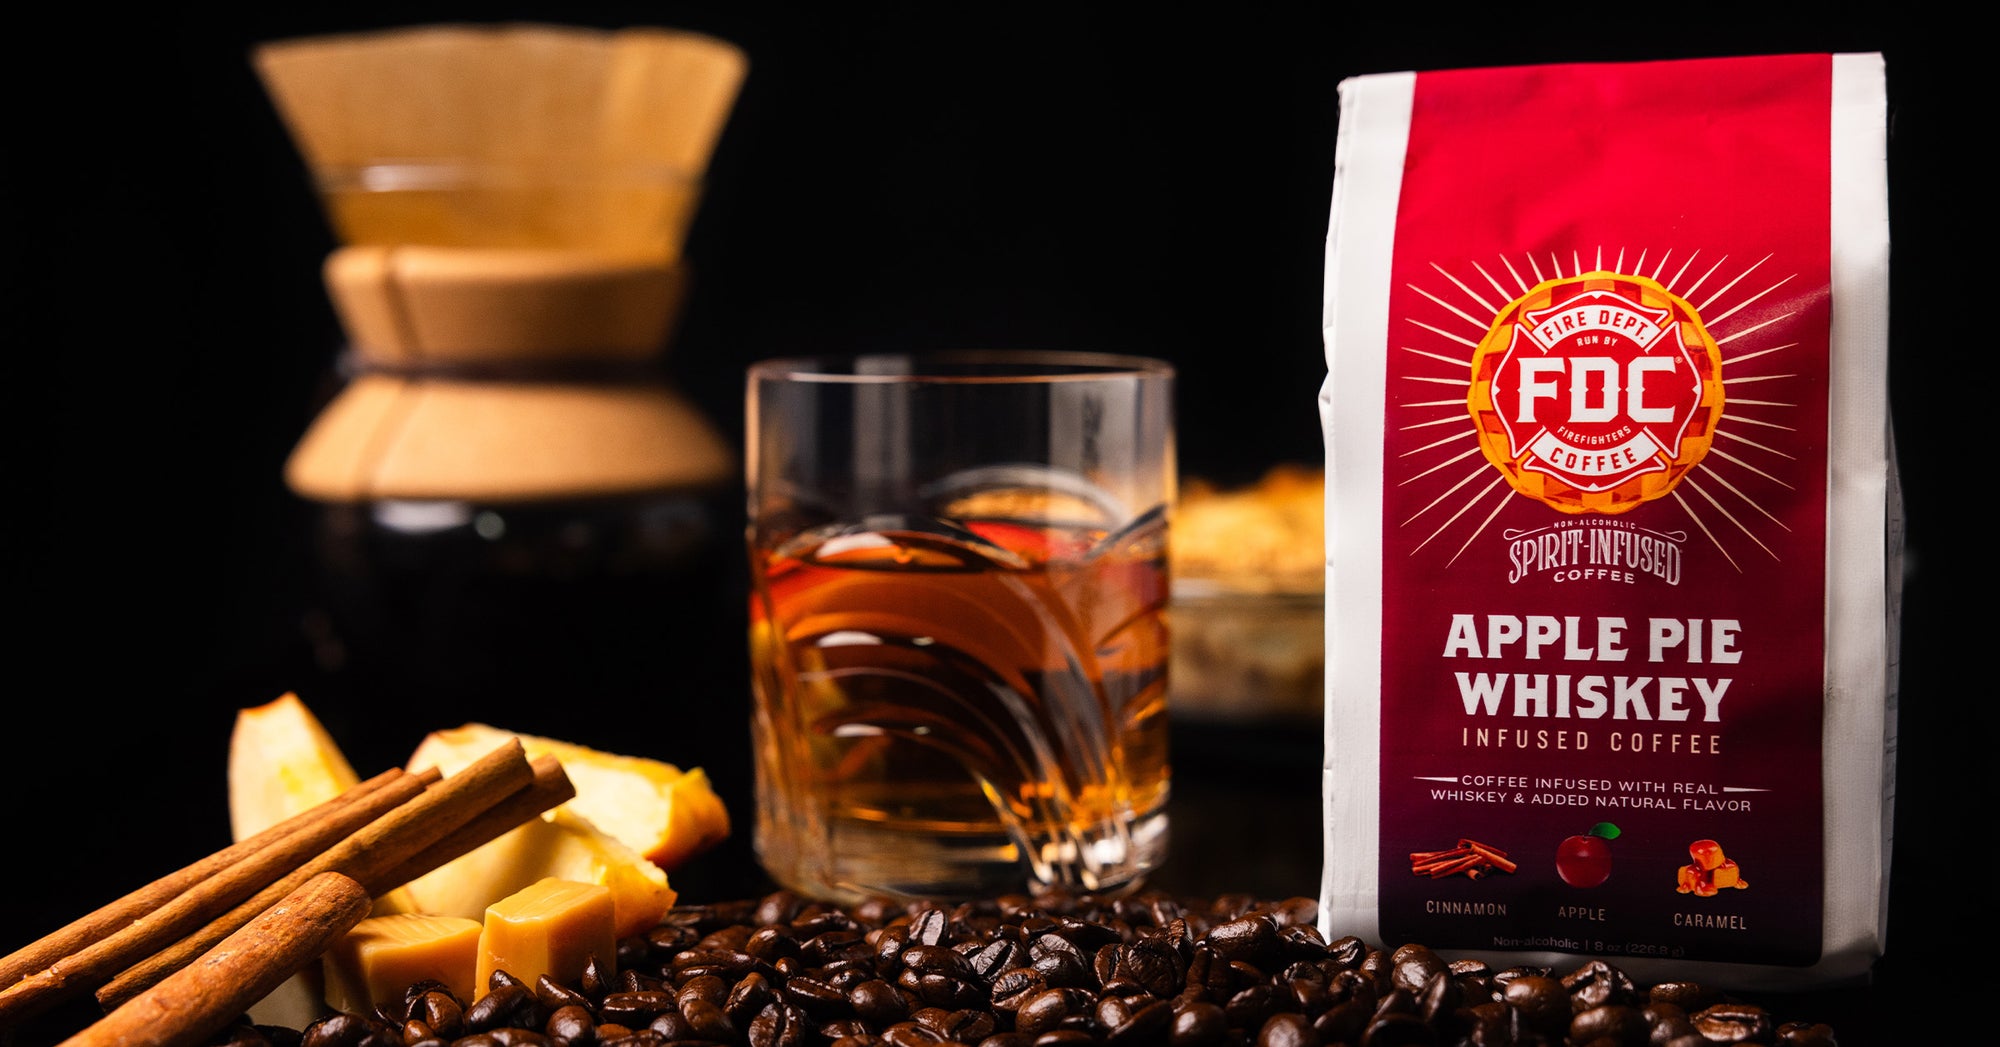 Spirit Infused Coffee Club - Apple Pie Whiskey Infused Coffee